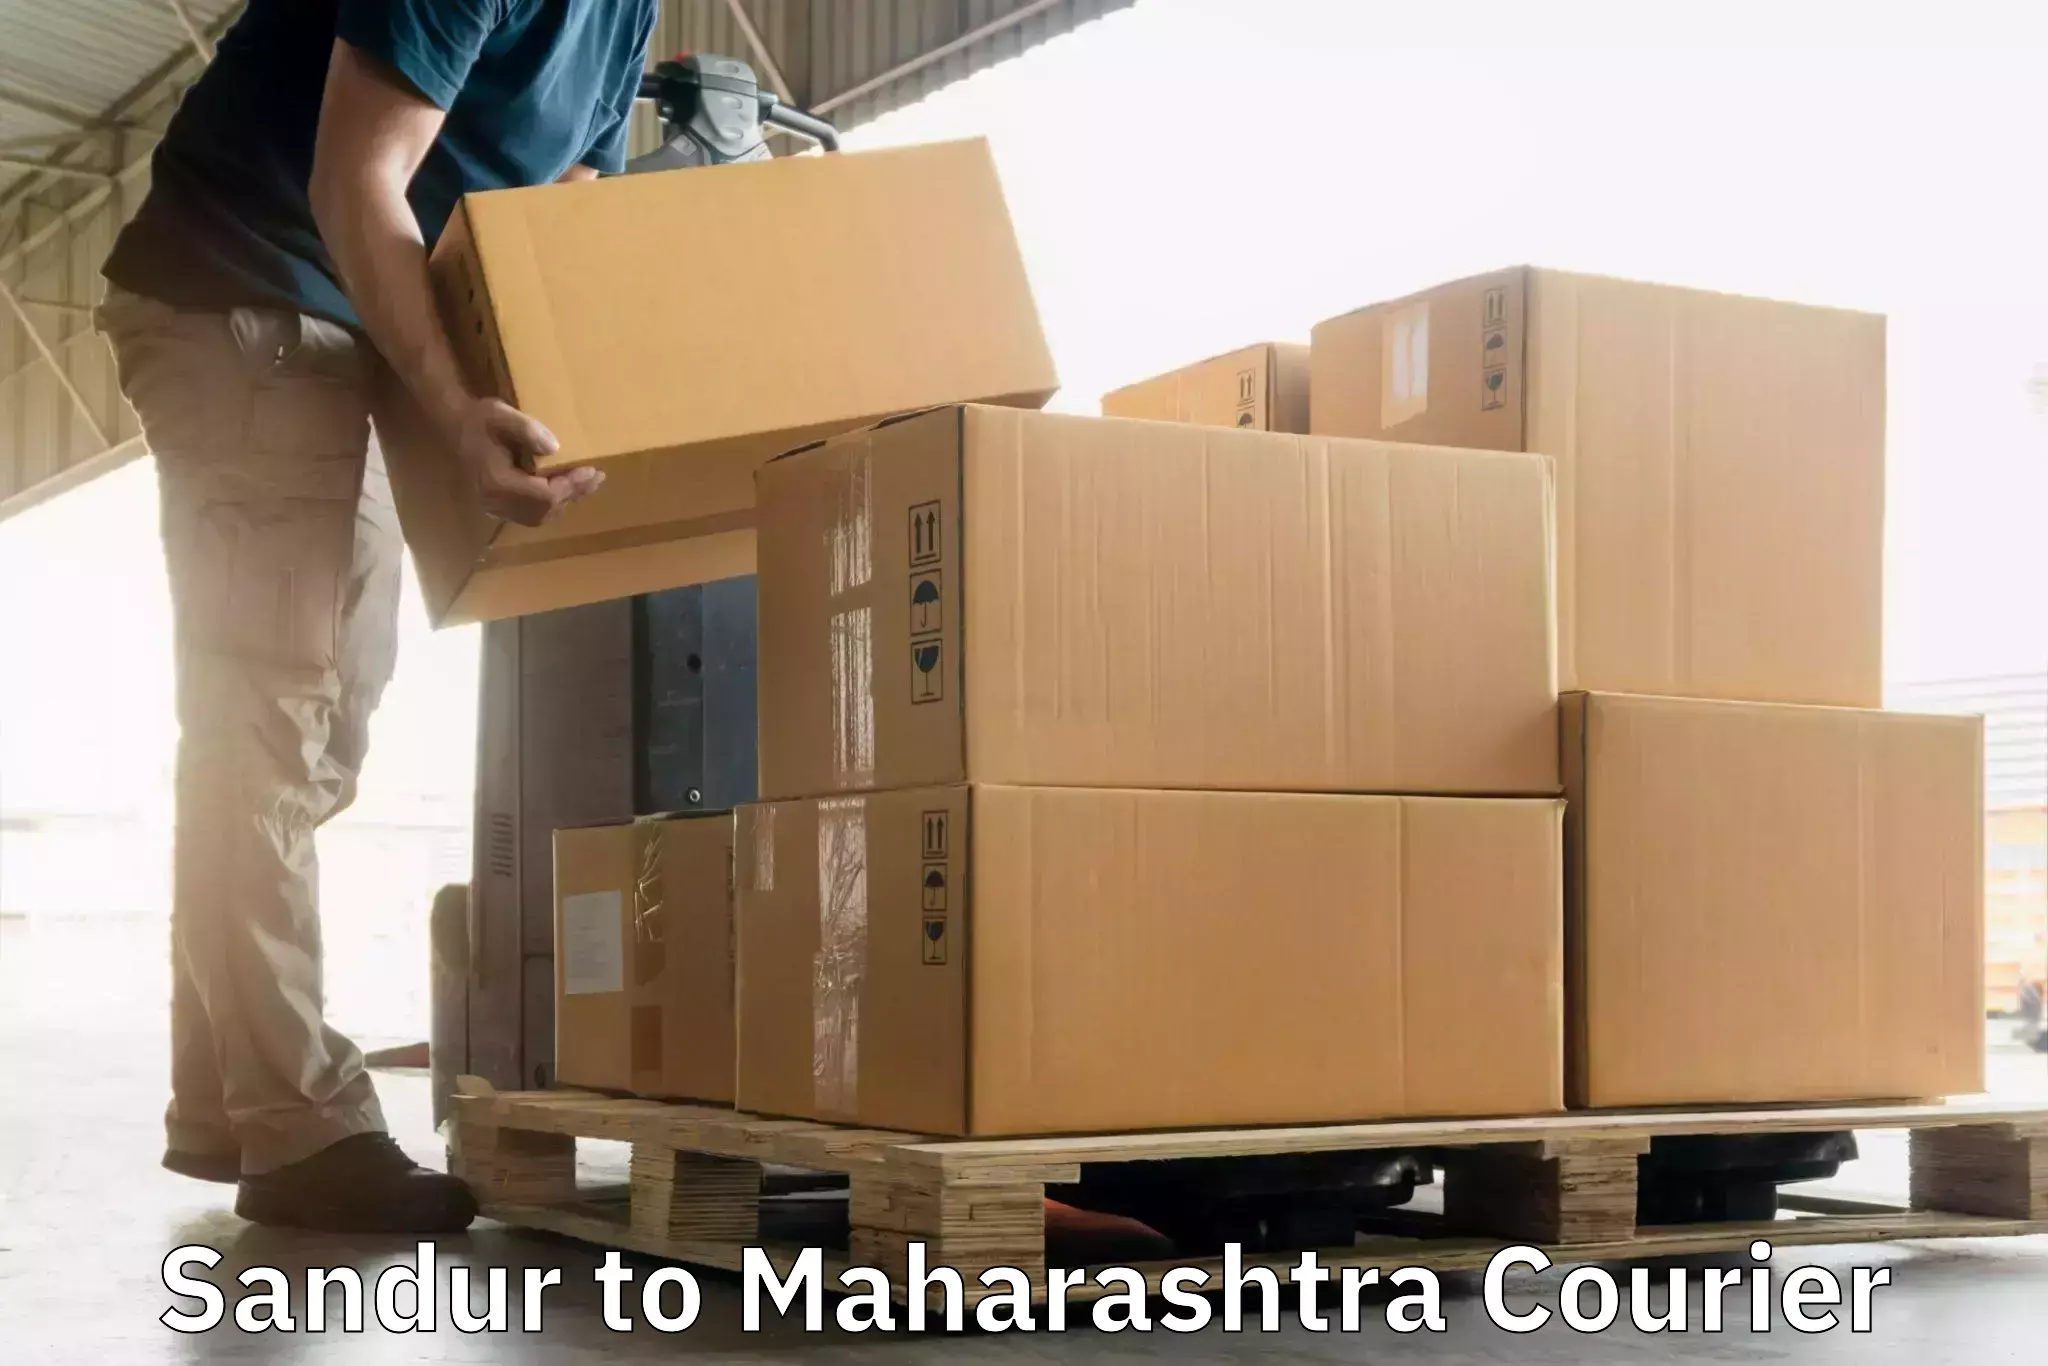 Express delivery capabilities Sandur to Bhandara